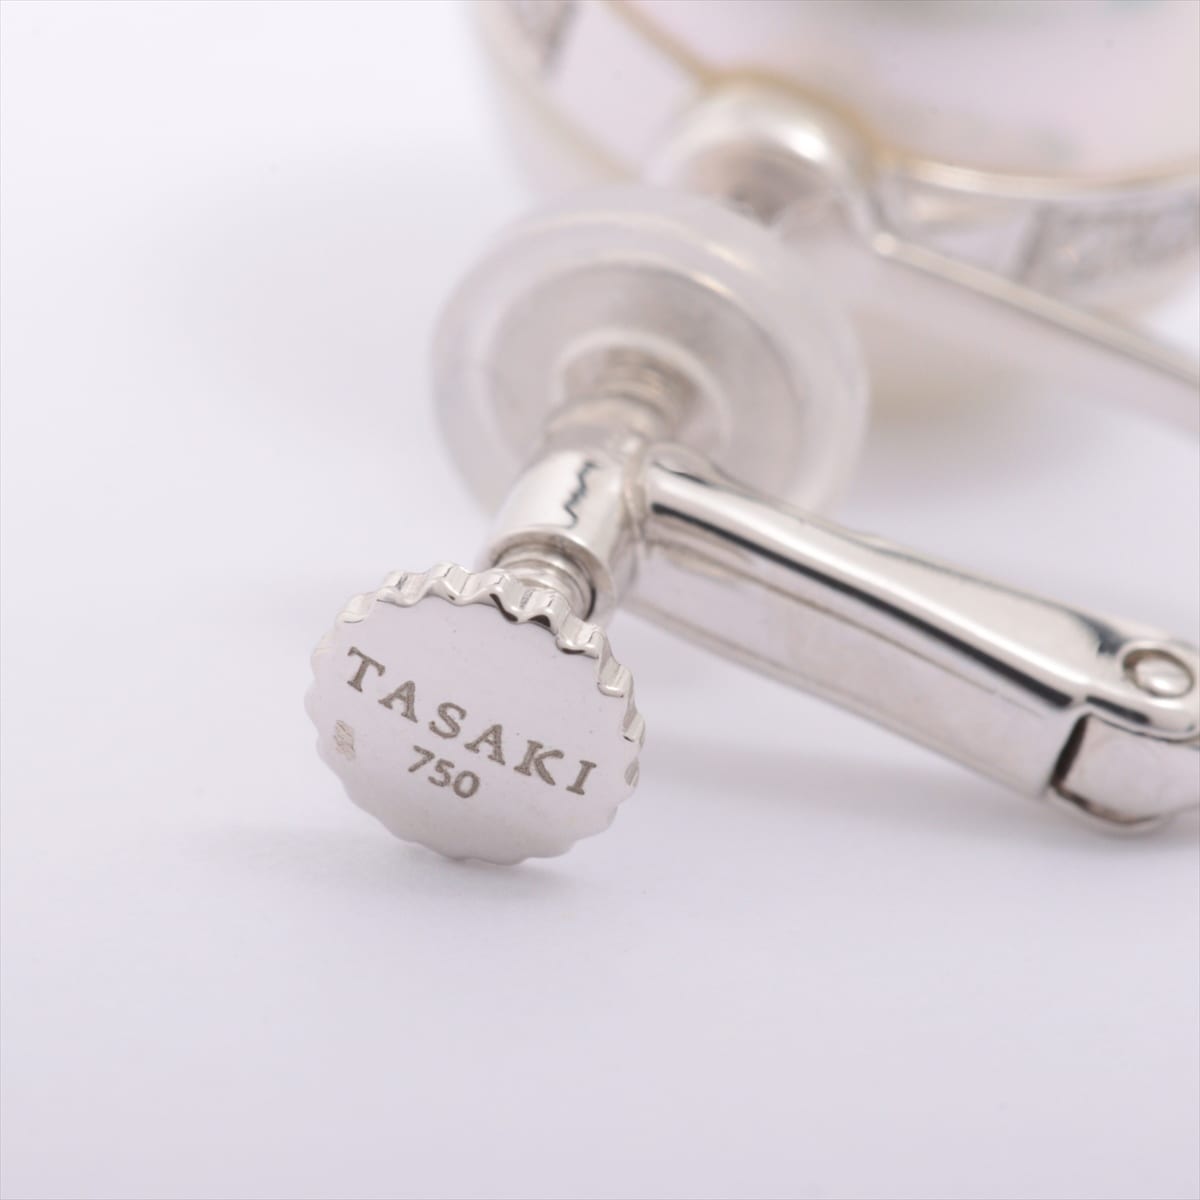 TASAKI Balance Pearl diamond Earings 750(WG) Total 8.4g 0.10 0.10